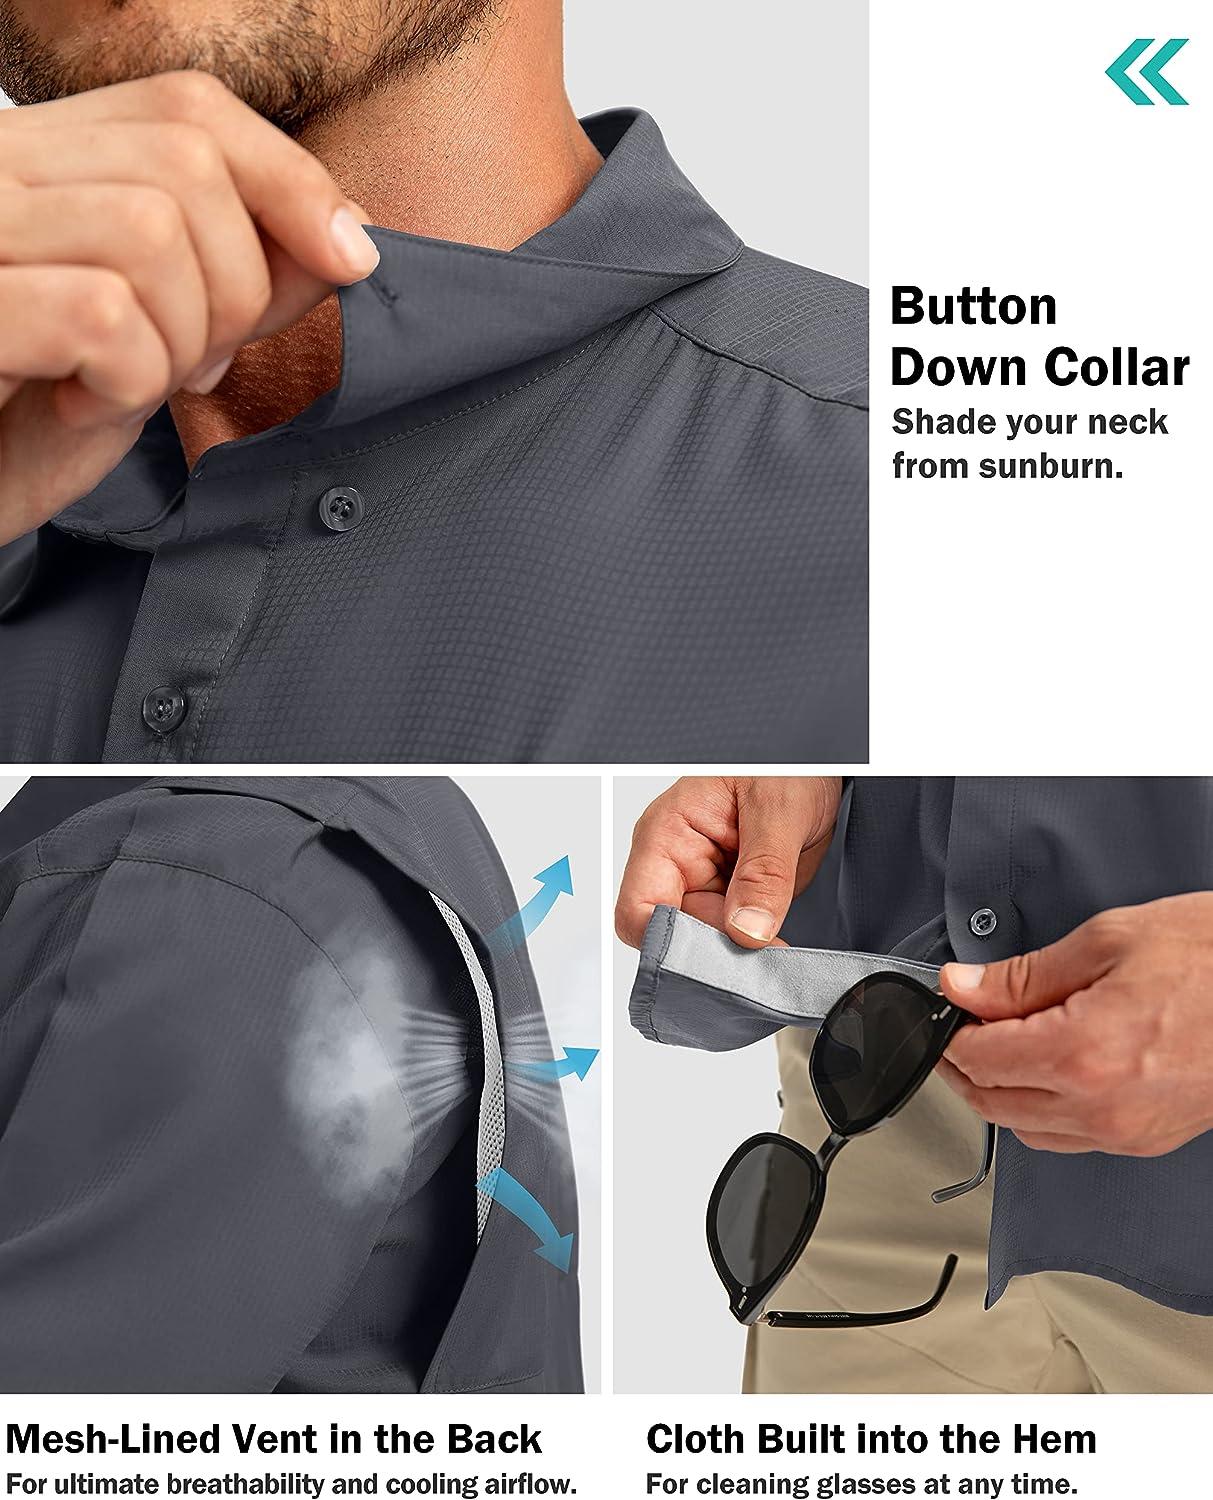 Men's Fishing Shirts with Zipper Pockets UPF 50+ Lightweight Cool Short Sleeve Button Down Shirts for Men Casual Hiking